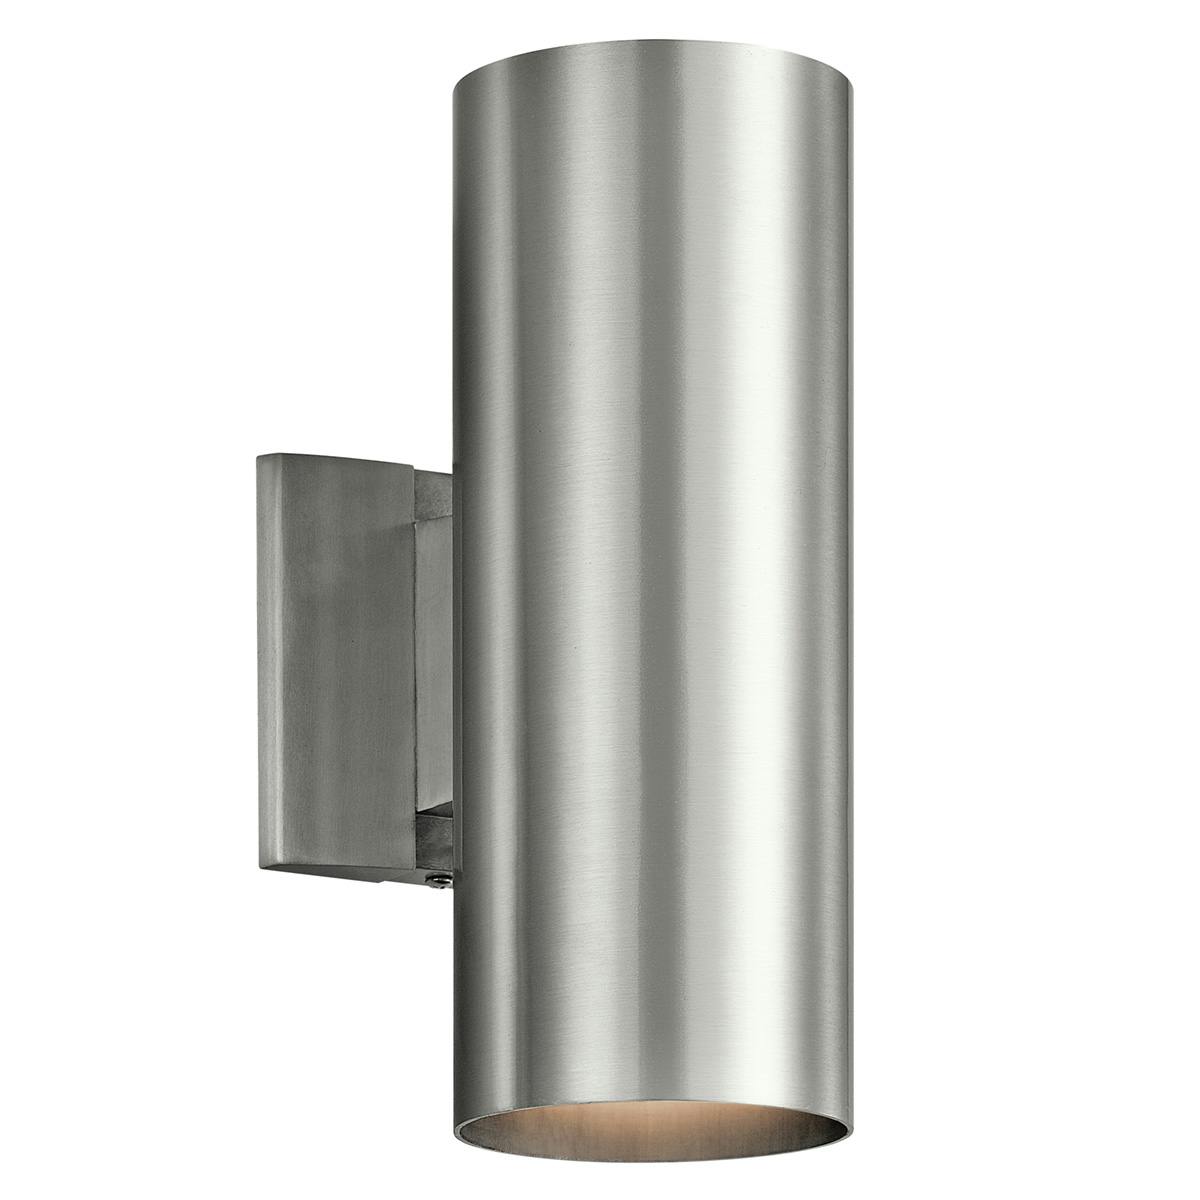 Cylinder 12" Wall Light Brushed Aluminum on a white background